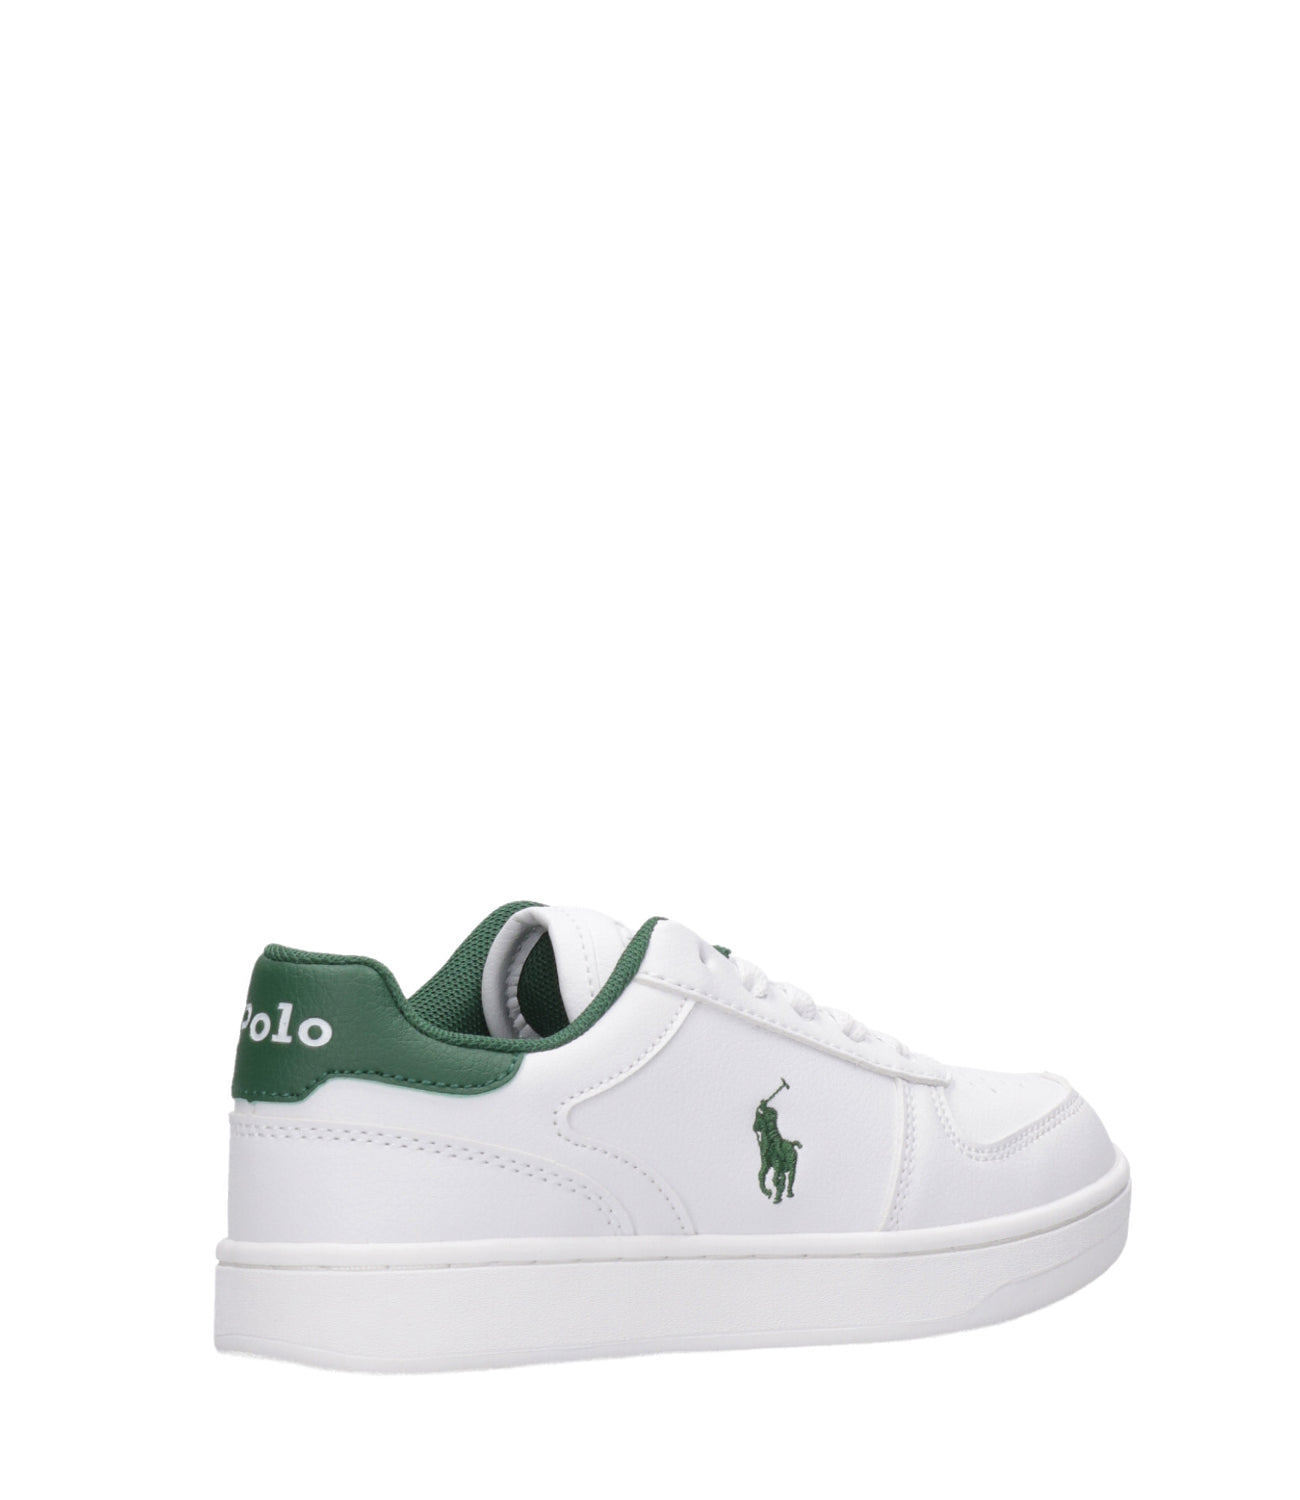 Ralph Lauren Childrenswear | Sneaker Polo Court White and Navy Blue